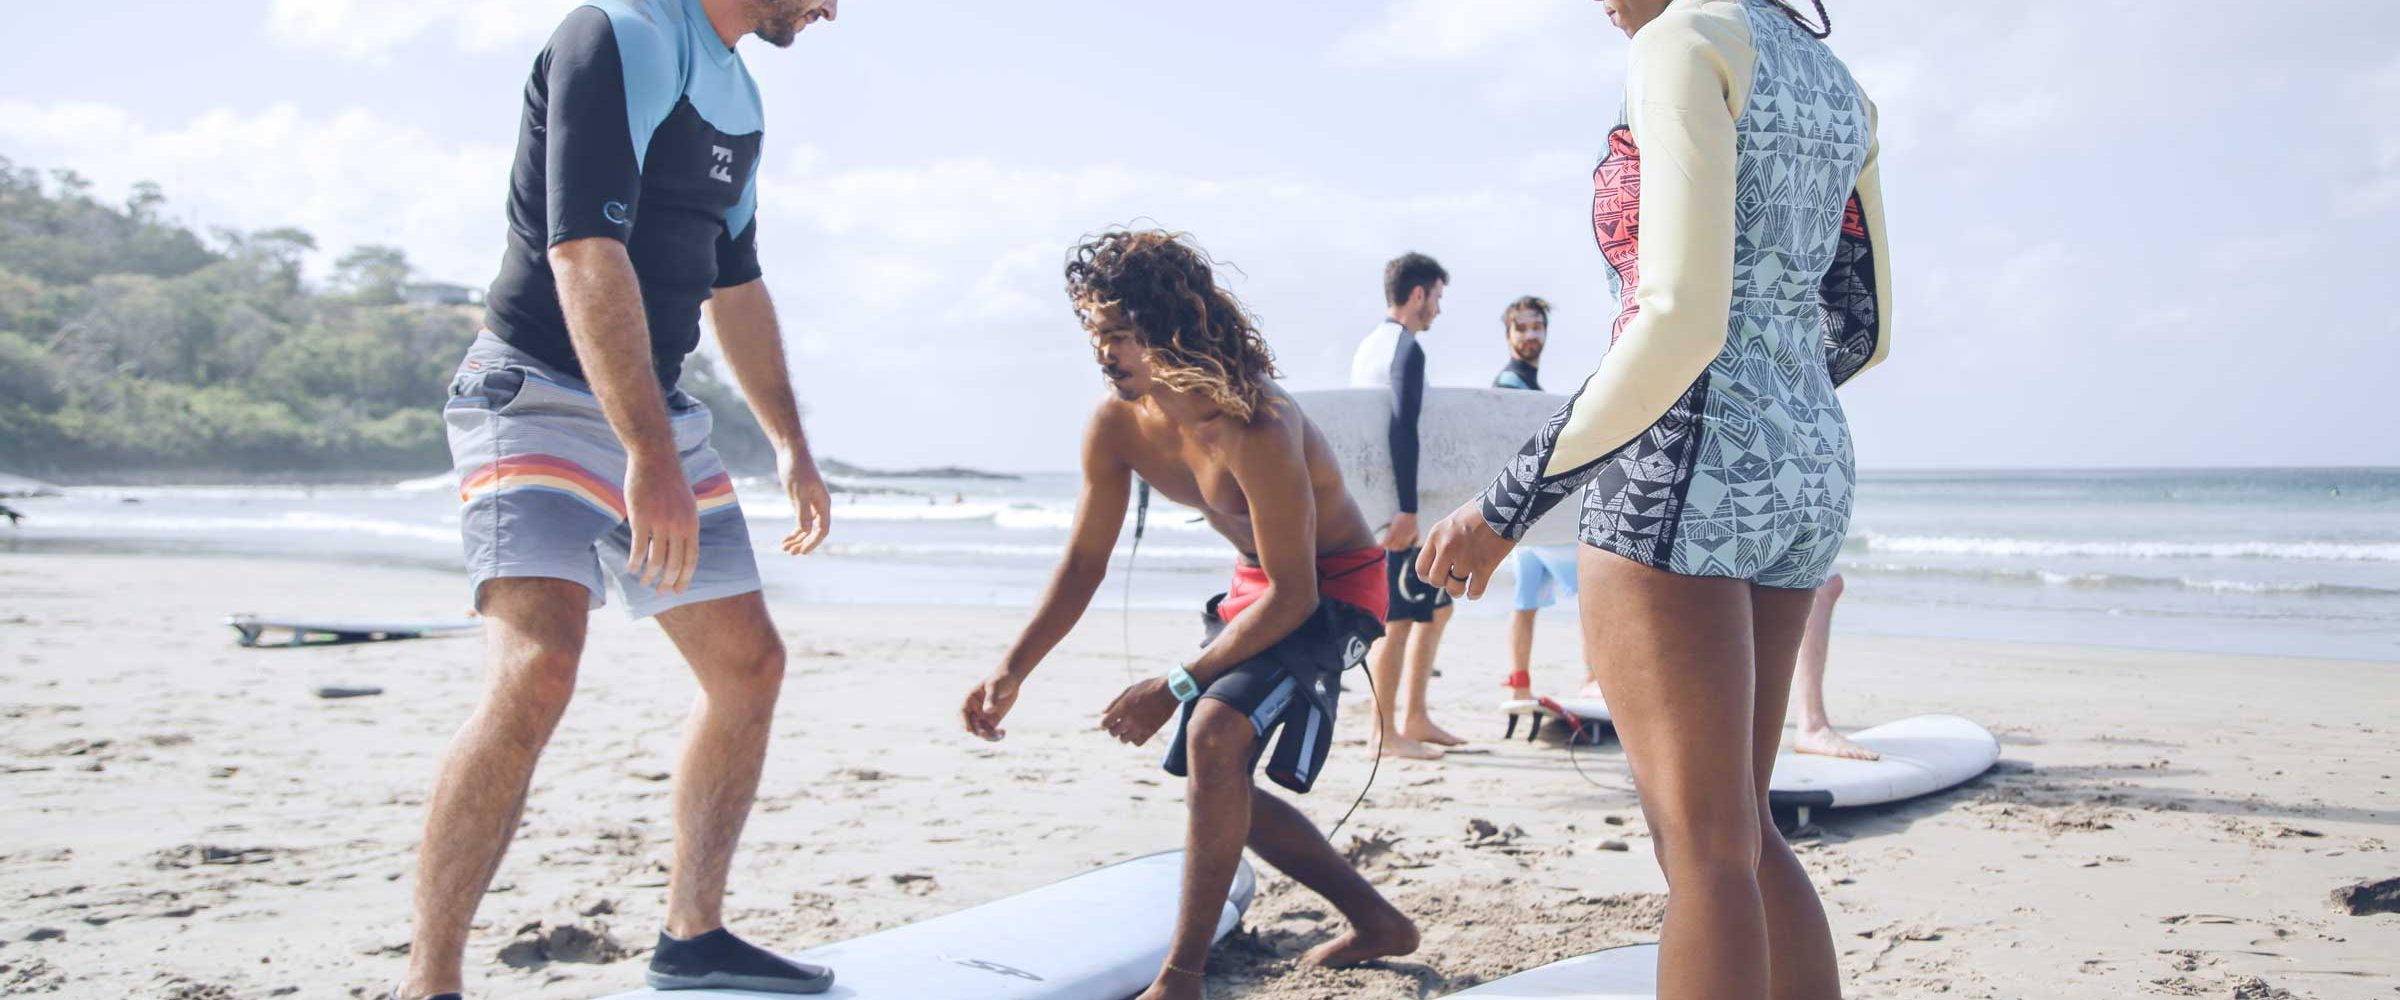 Learn to Surf Nicaragua